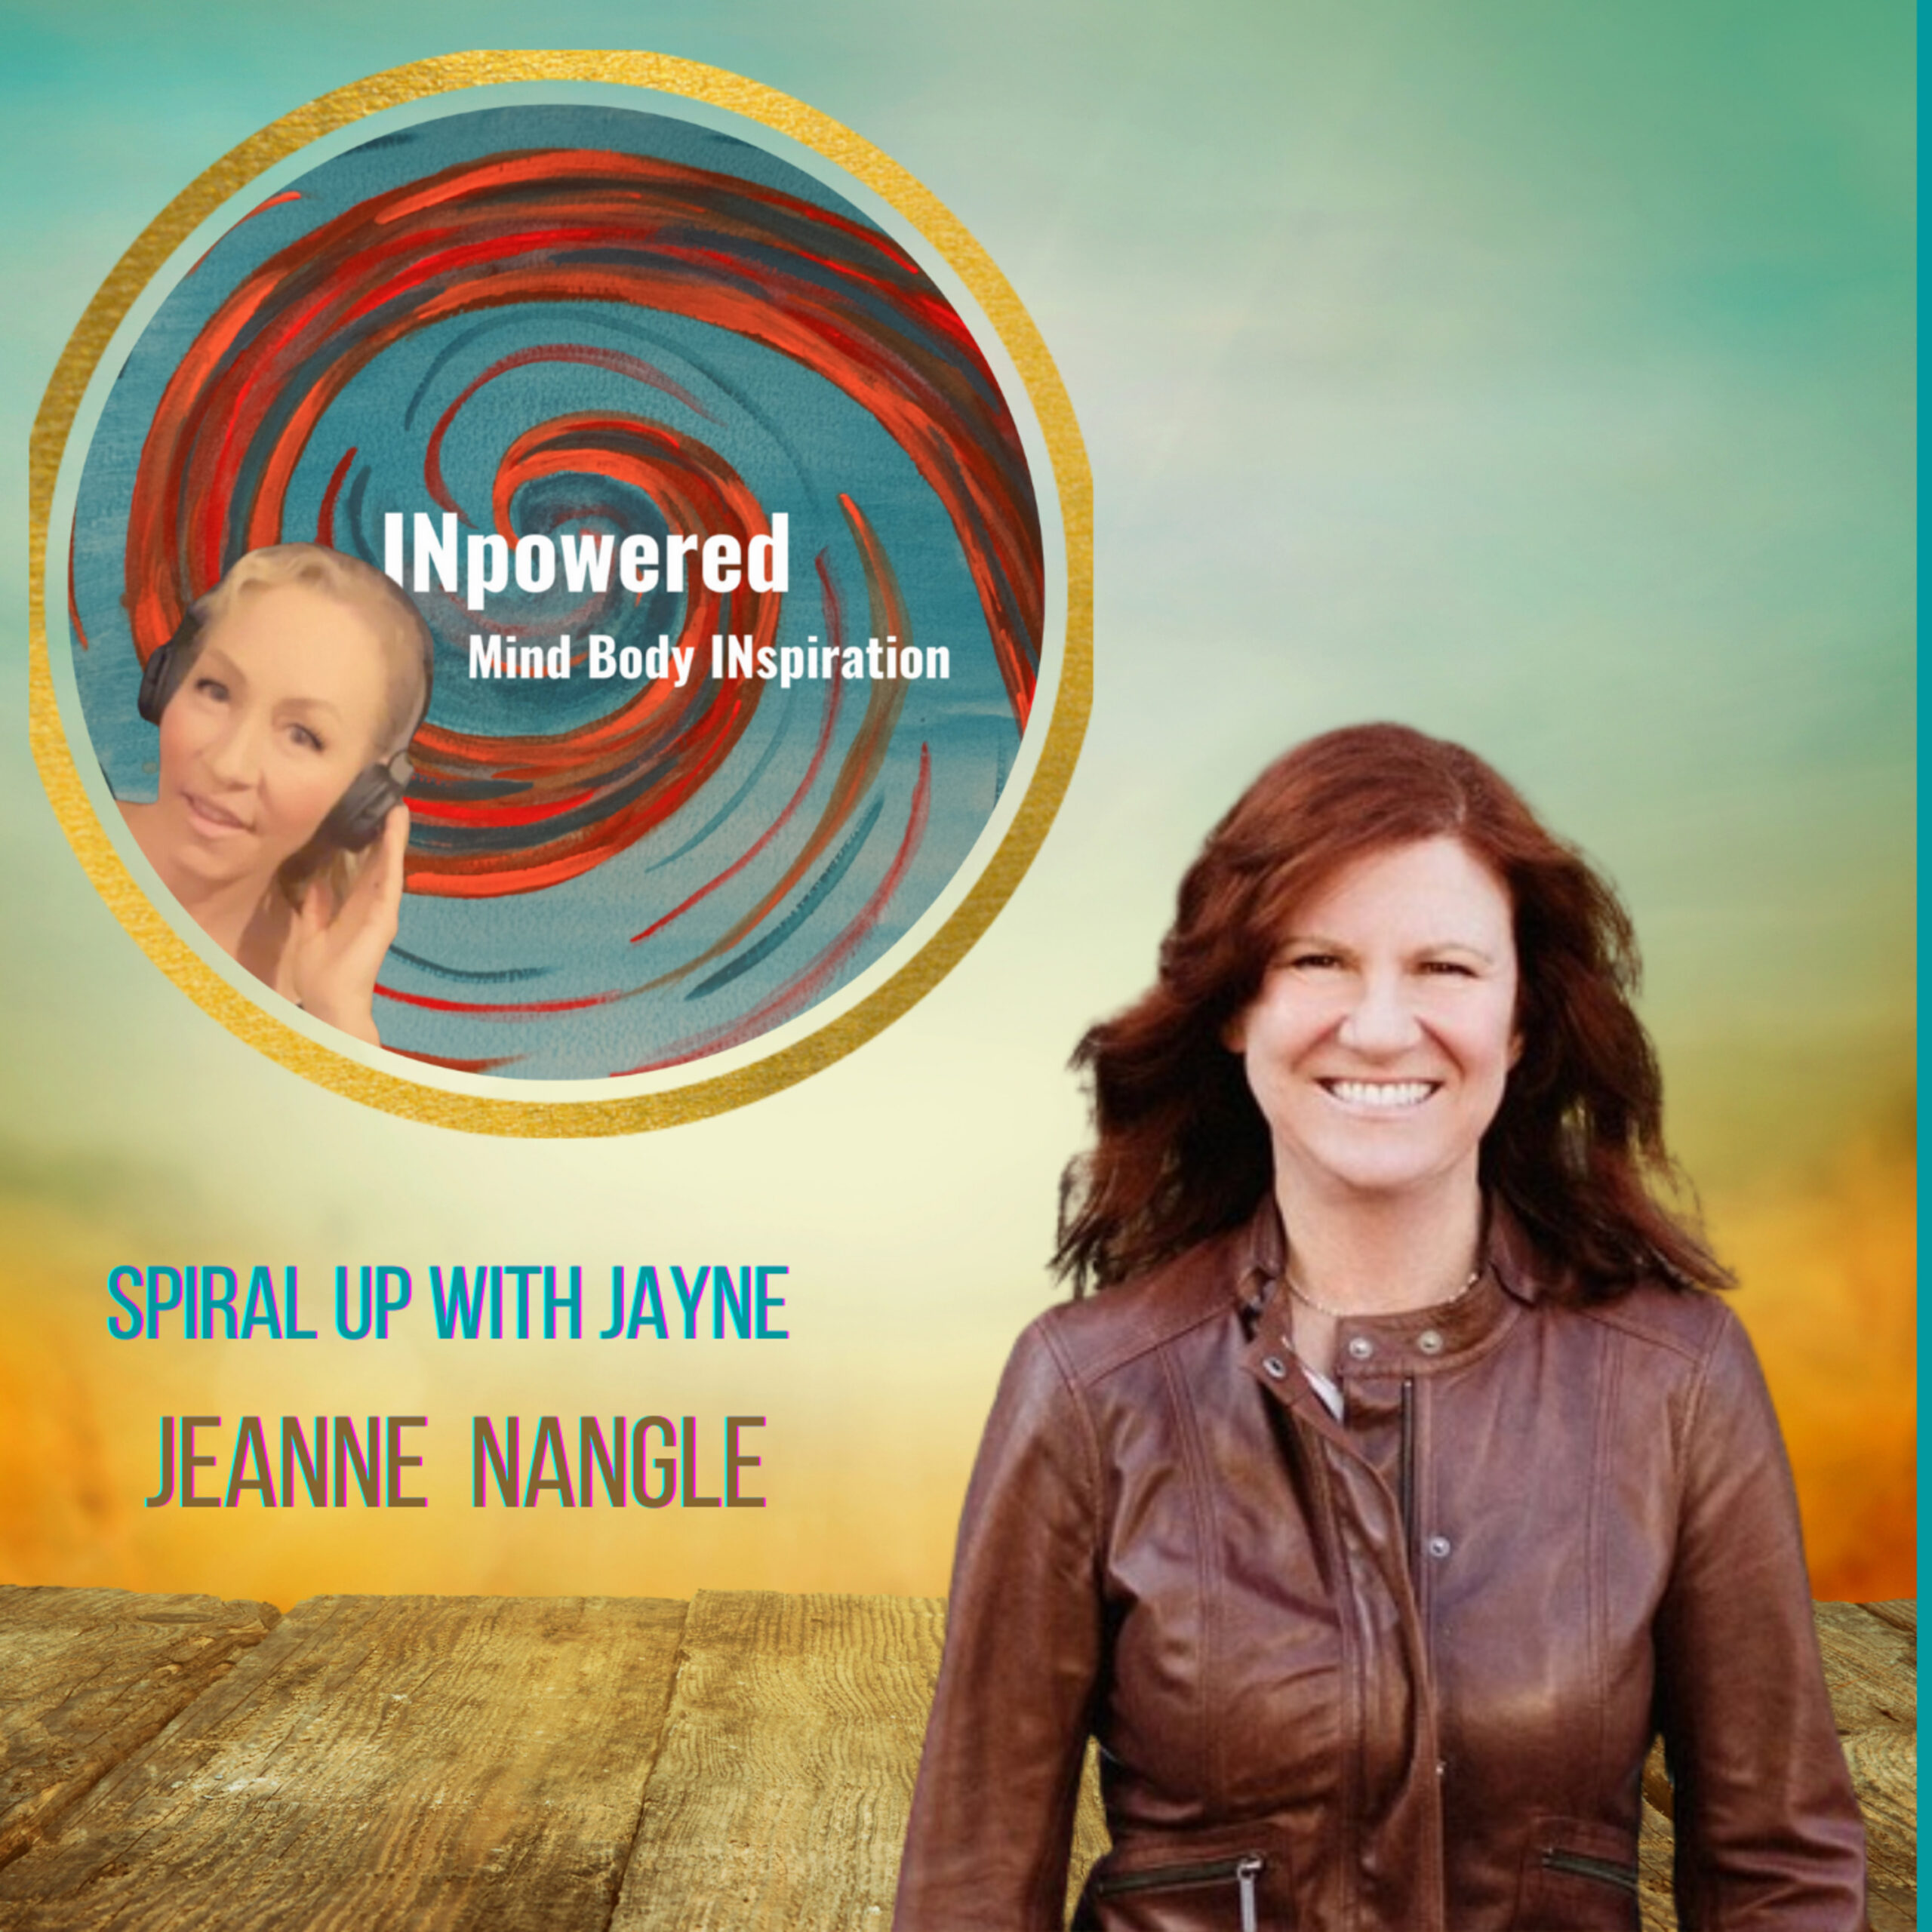 Jeanne Nangle – A Soul Coach